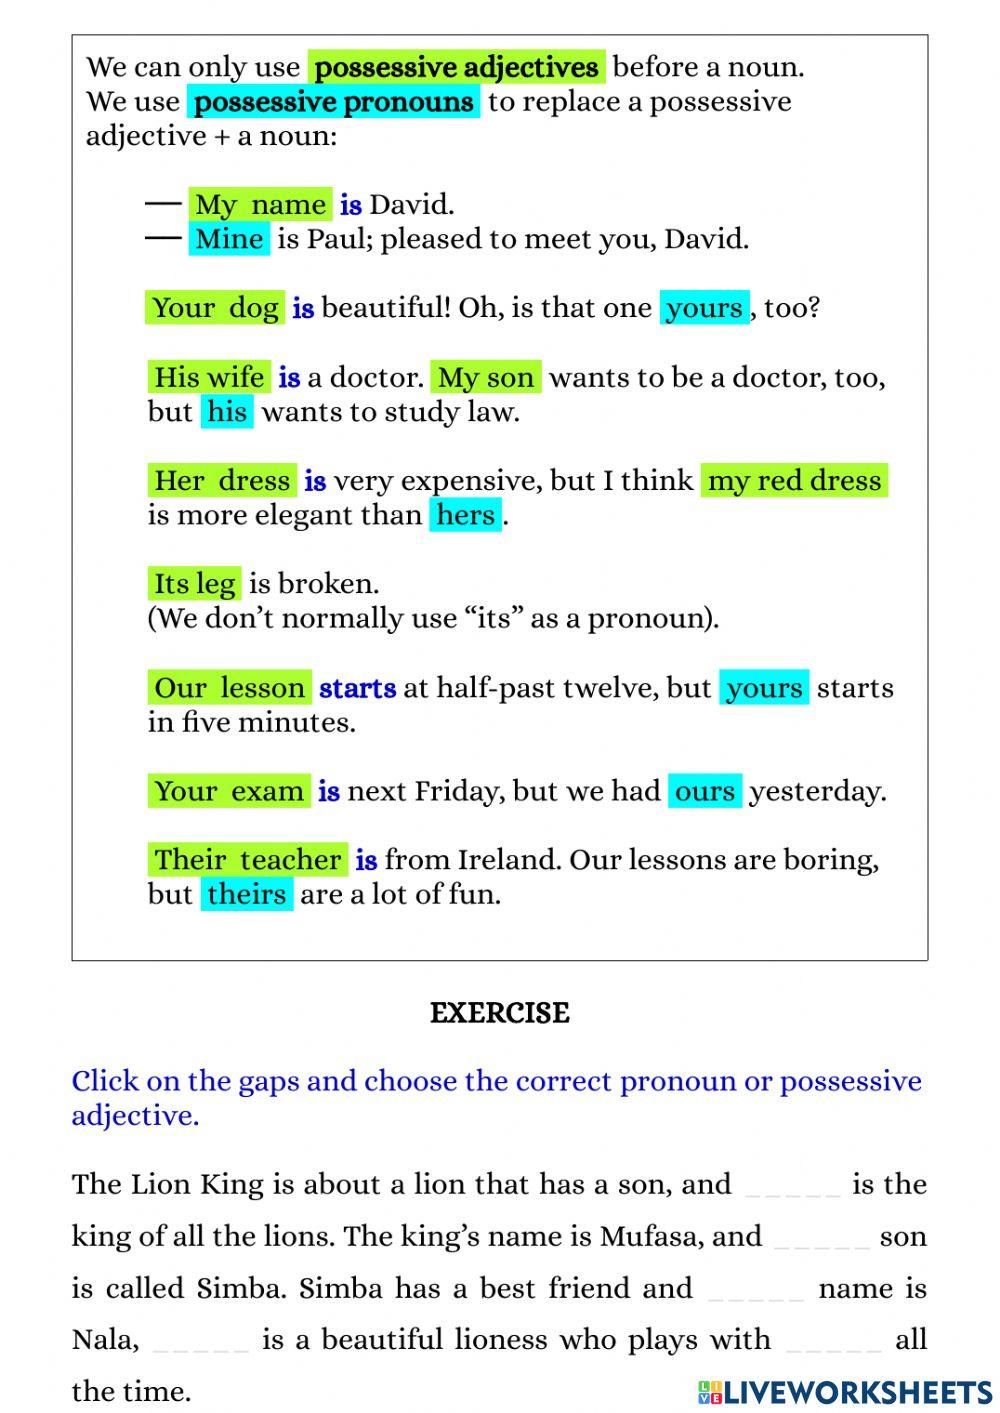 Pronouns and possessives - review